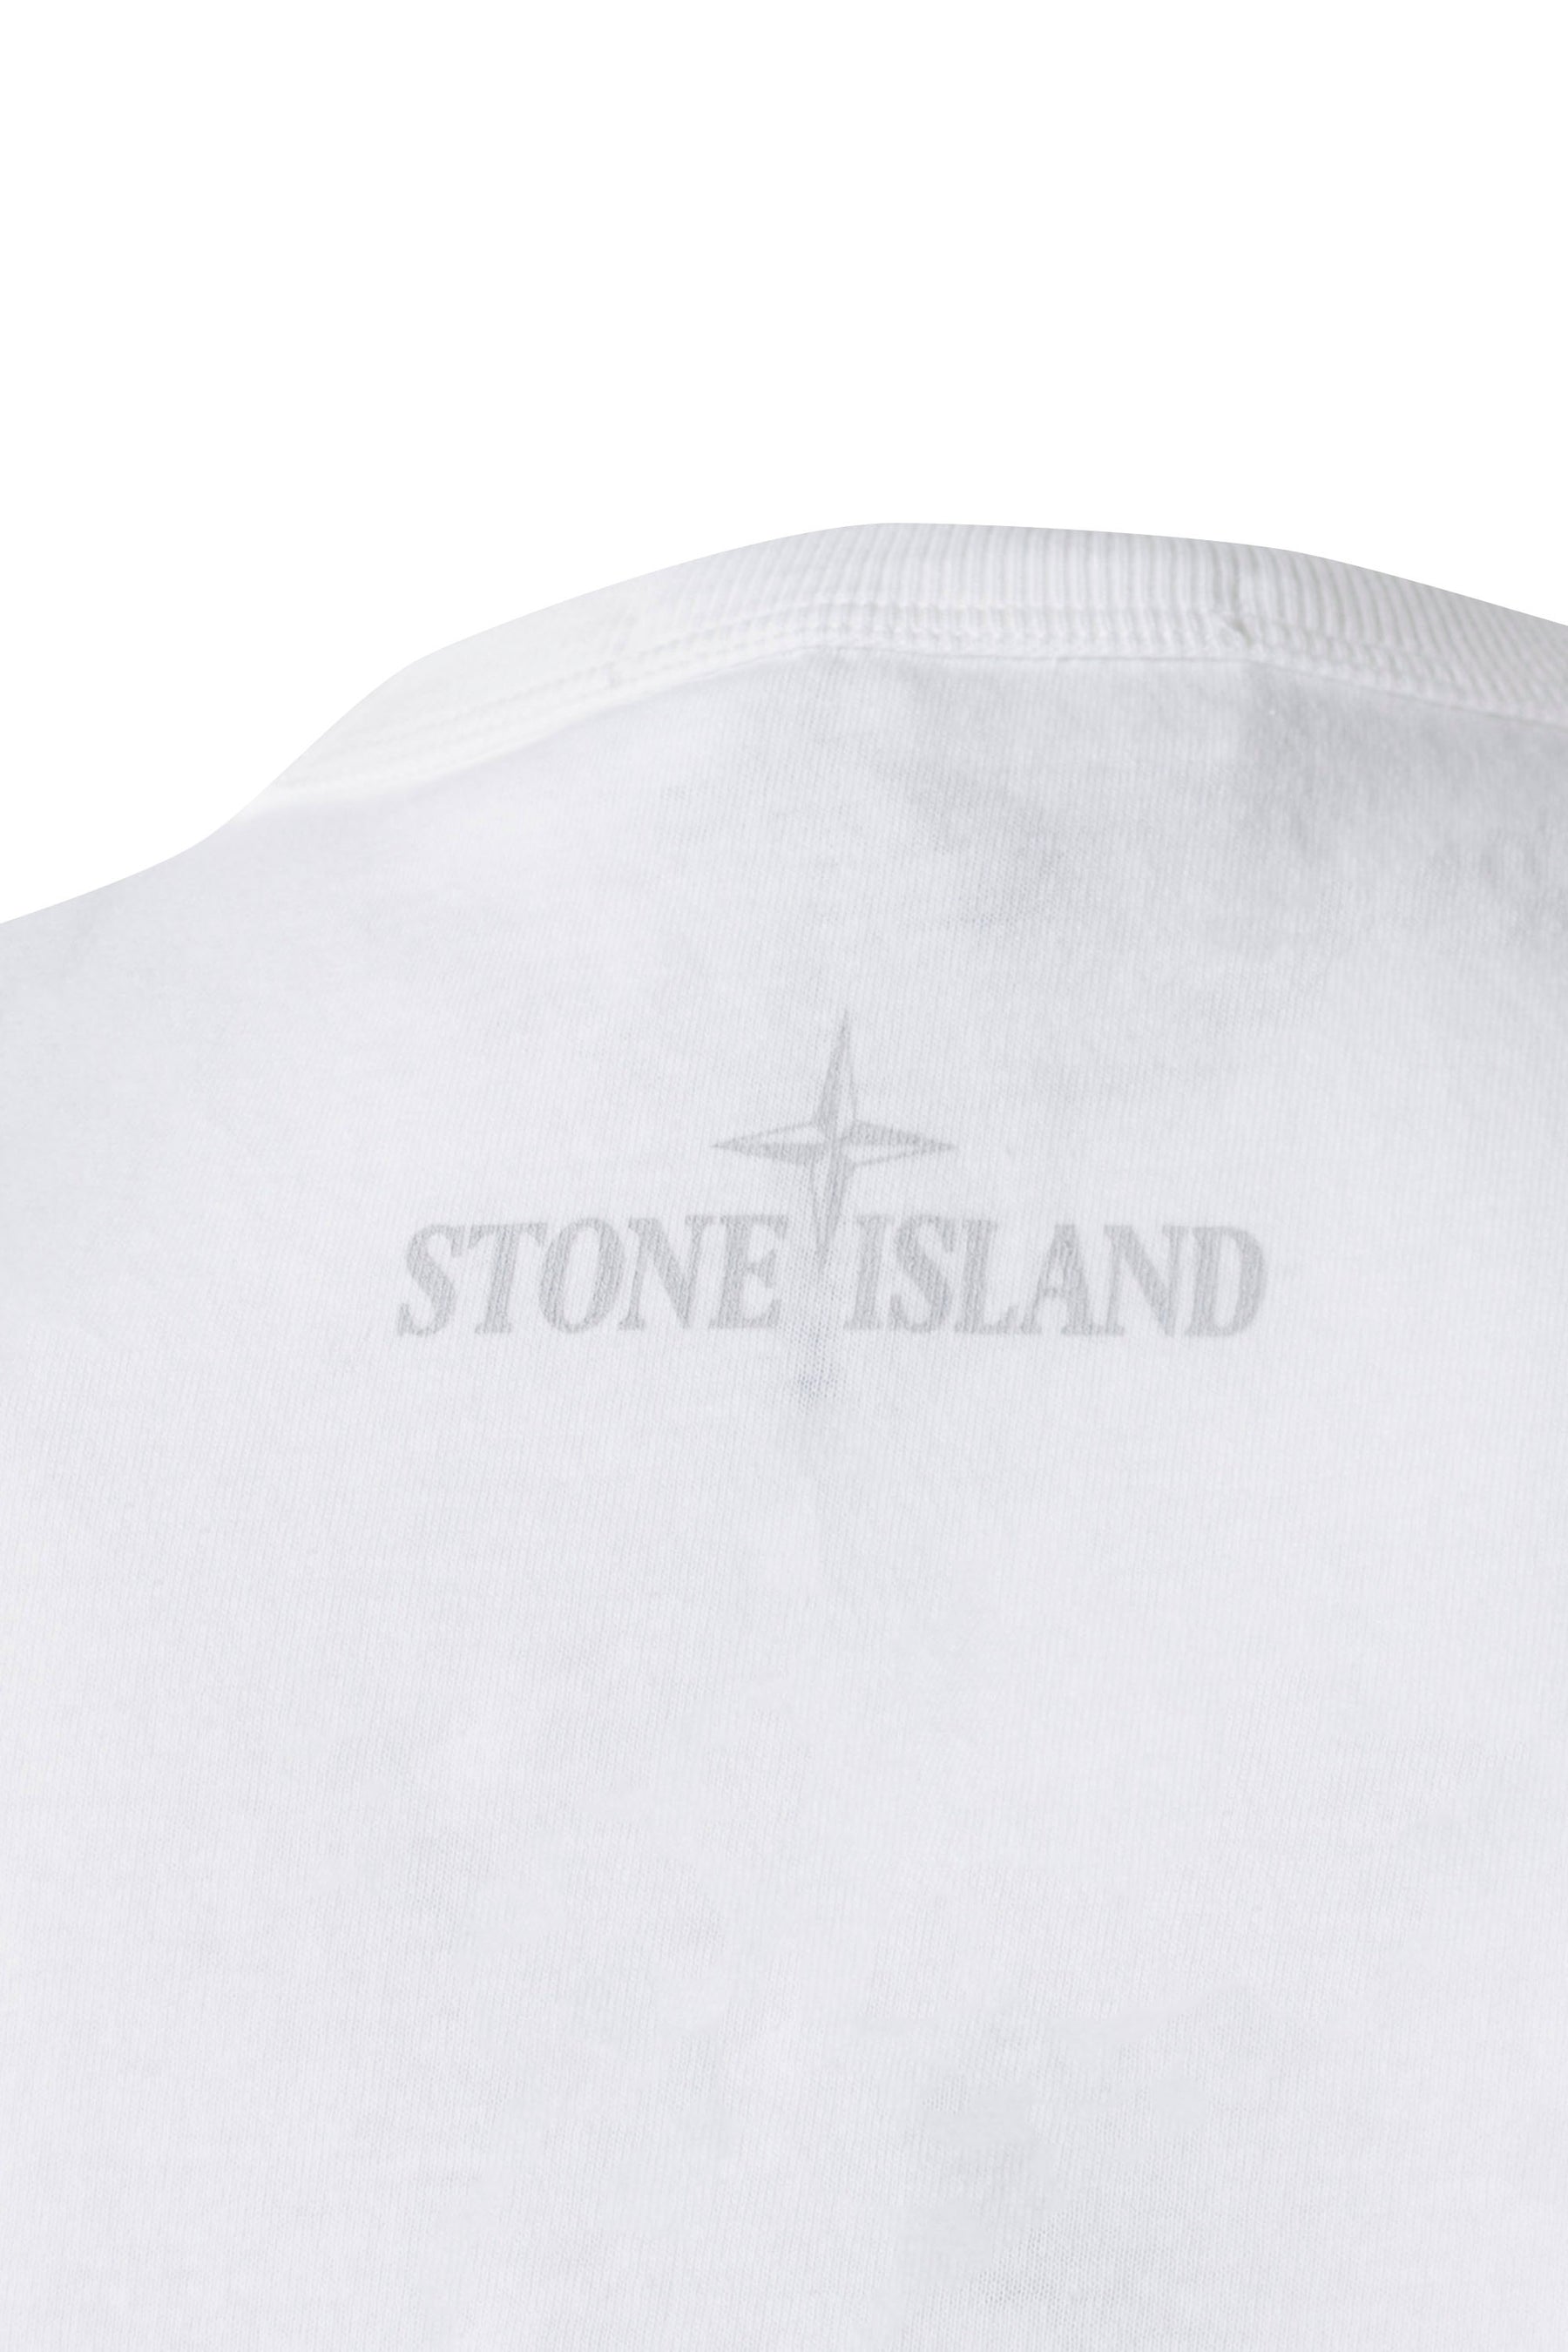 Stone Island SS23 MINI LOGO T-SHIRT / WHT - NUBIAN